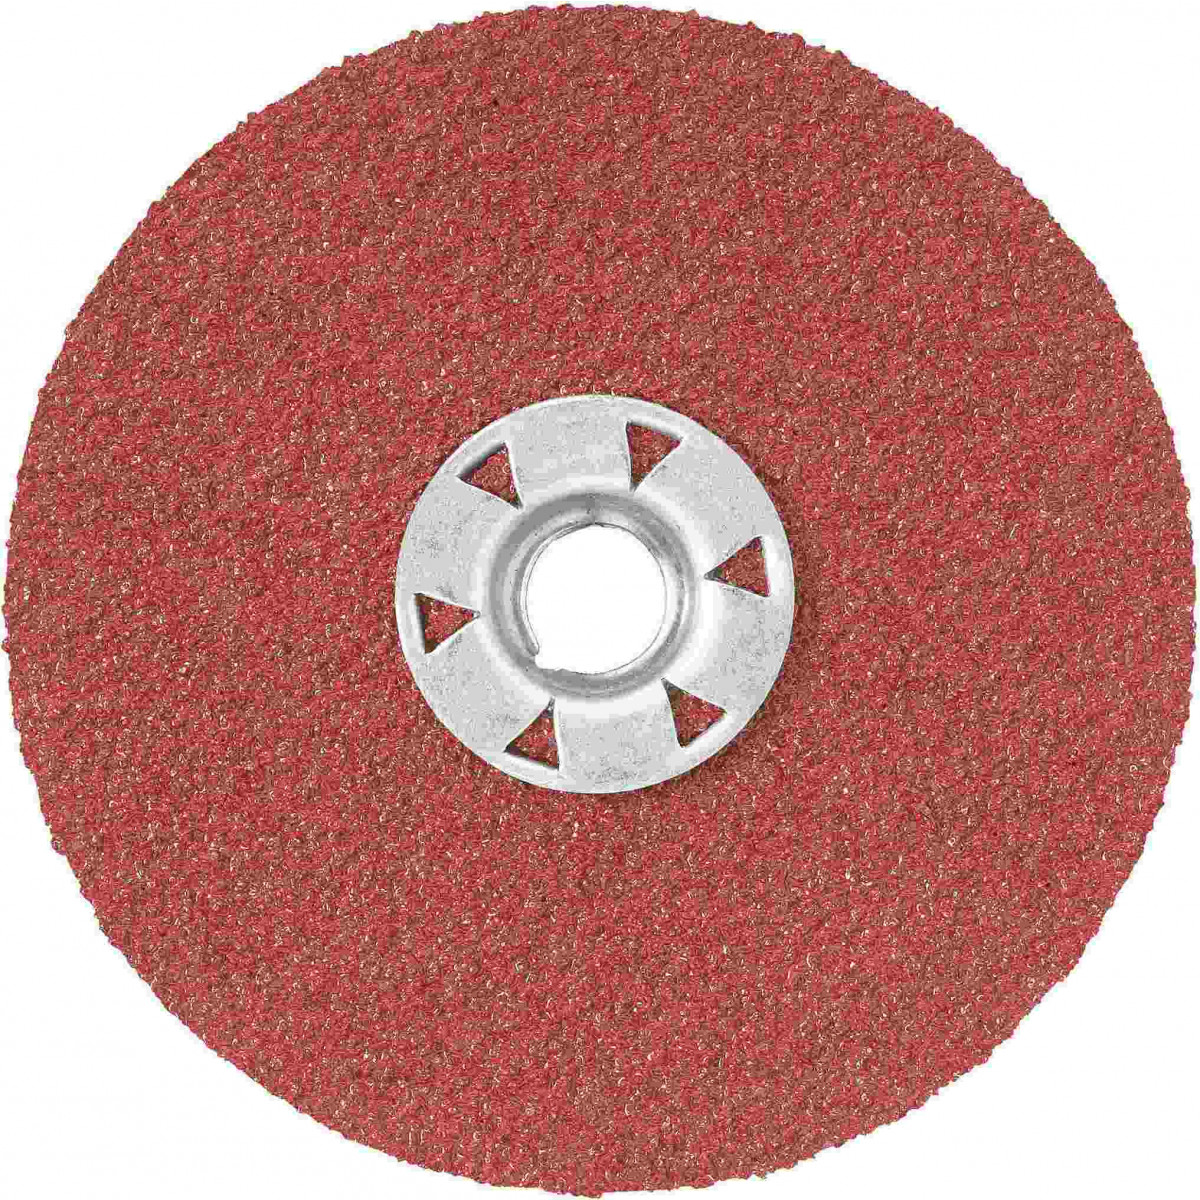 5 x 5/8 60G Ceramic Resin Fibre Disc